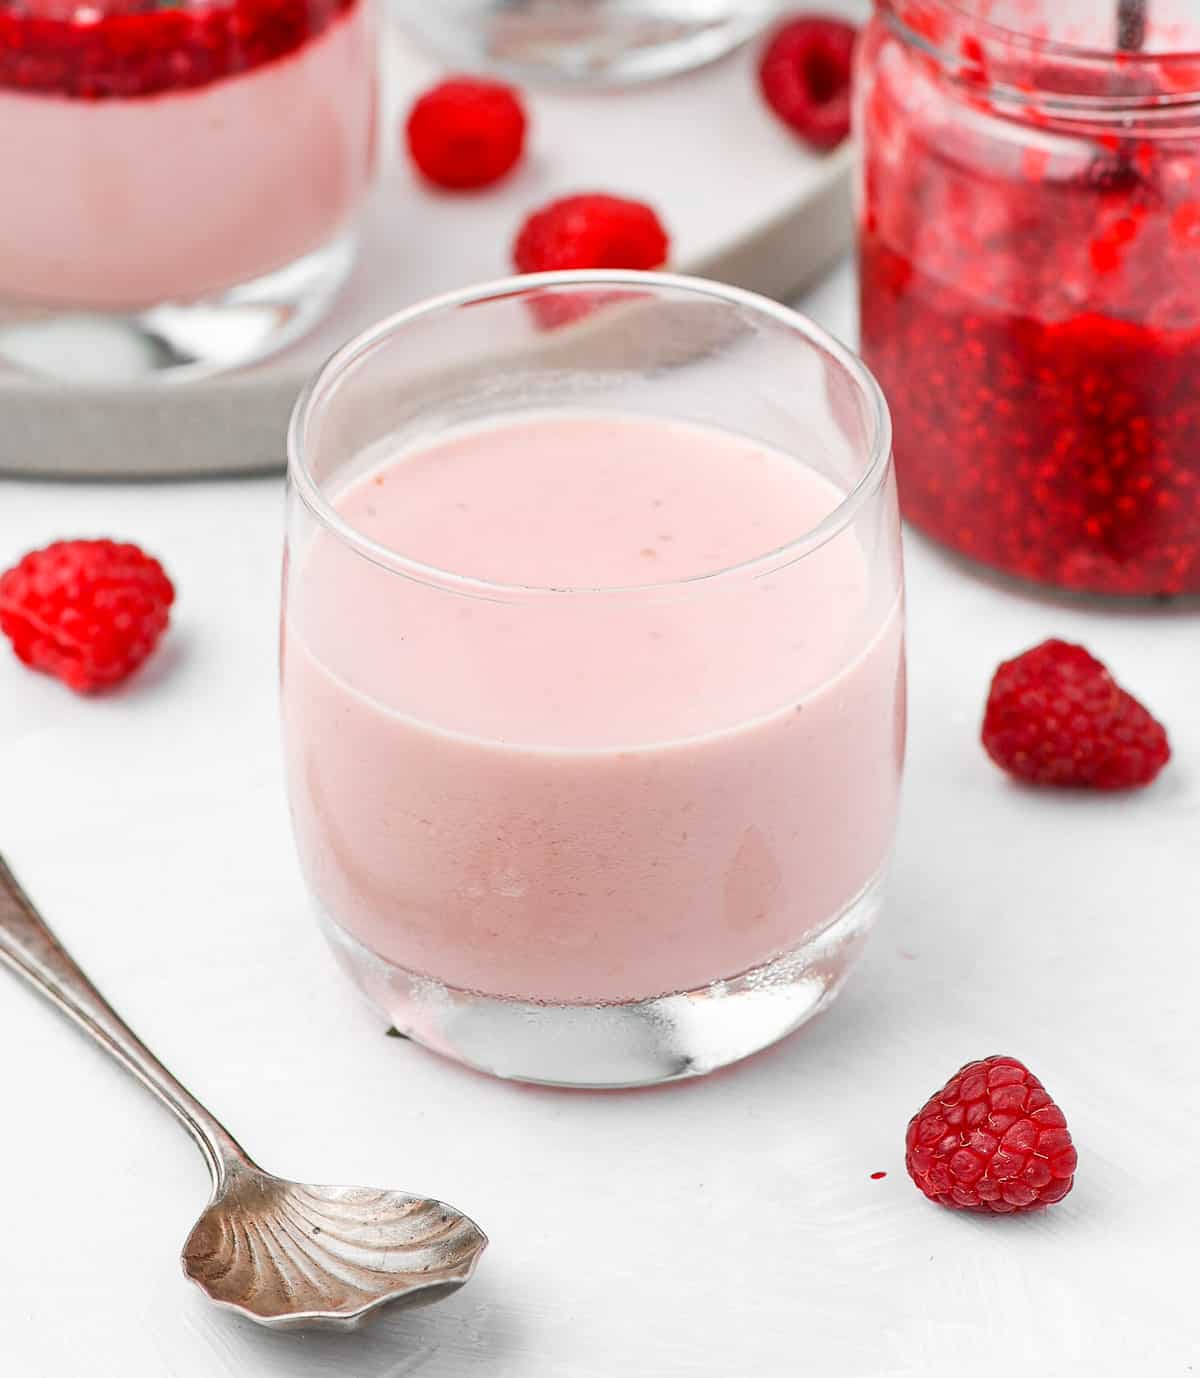 Raspberry cream set in a glass cup.